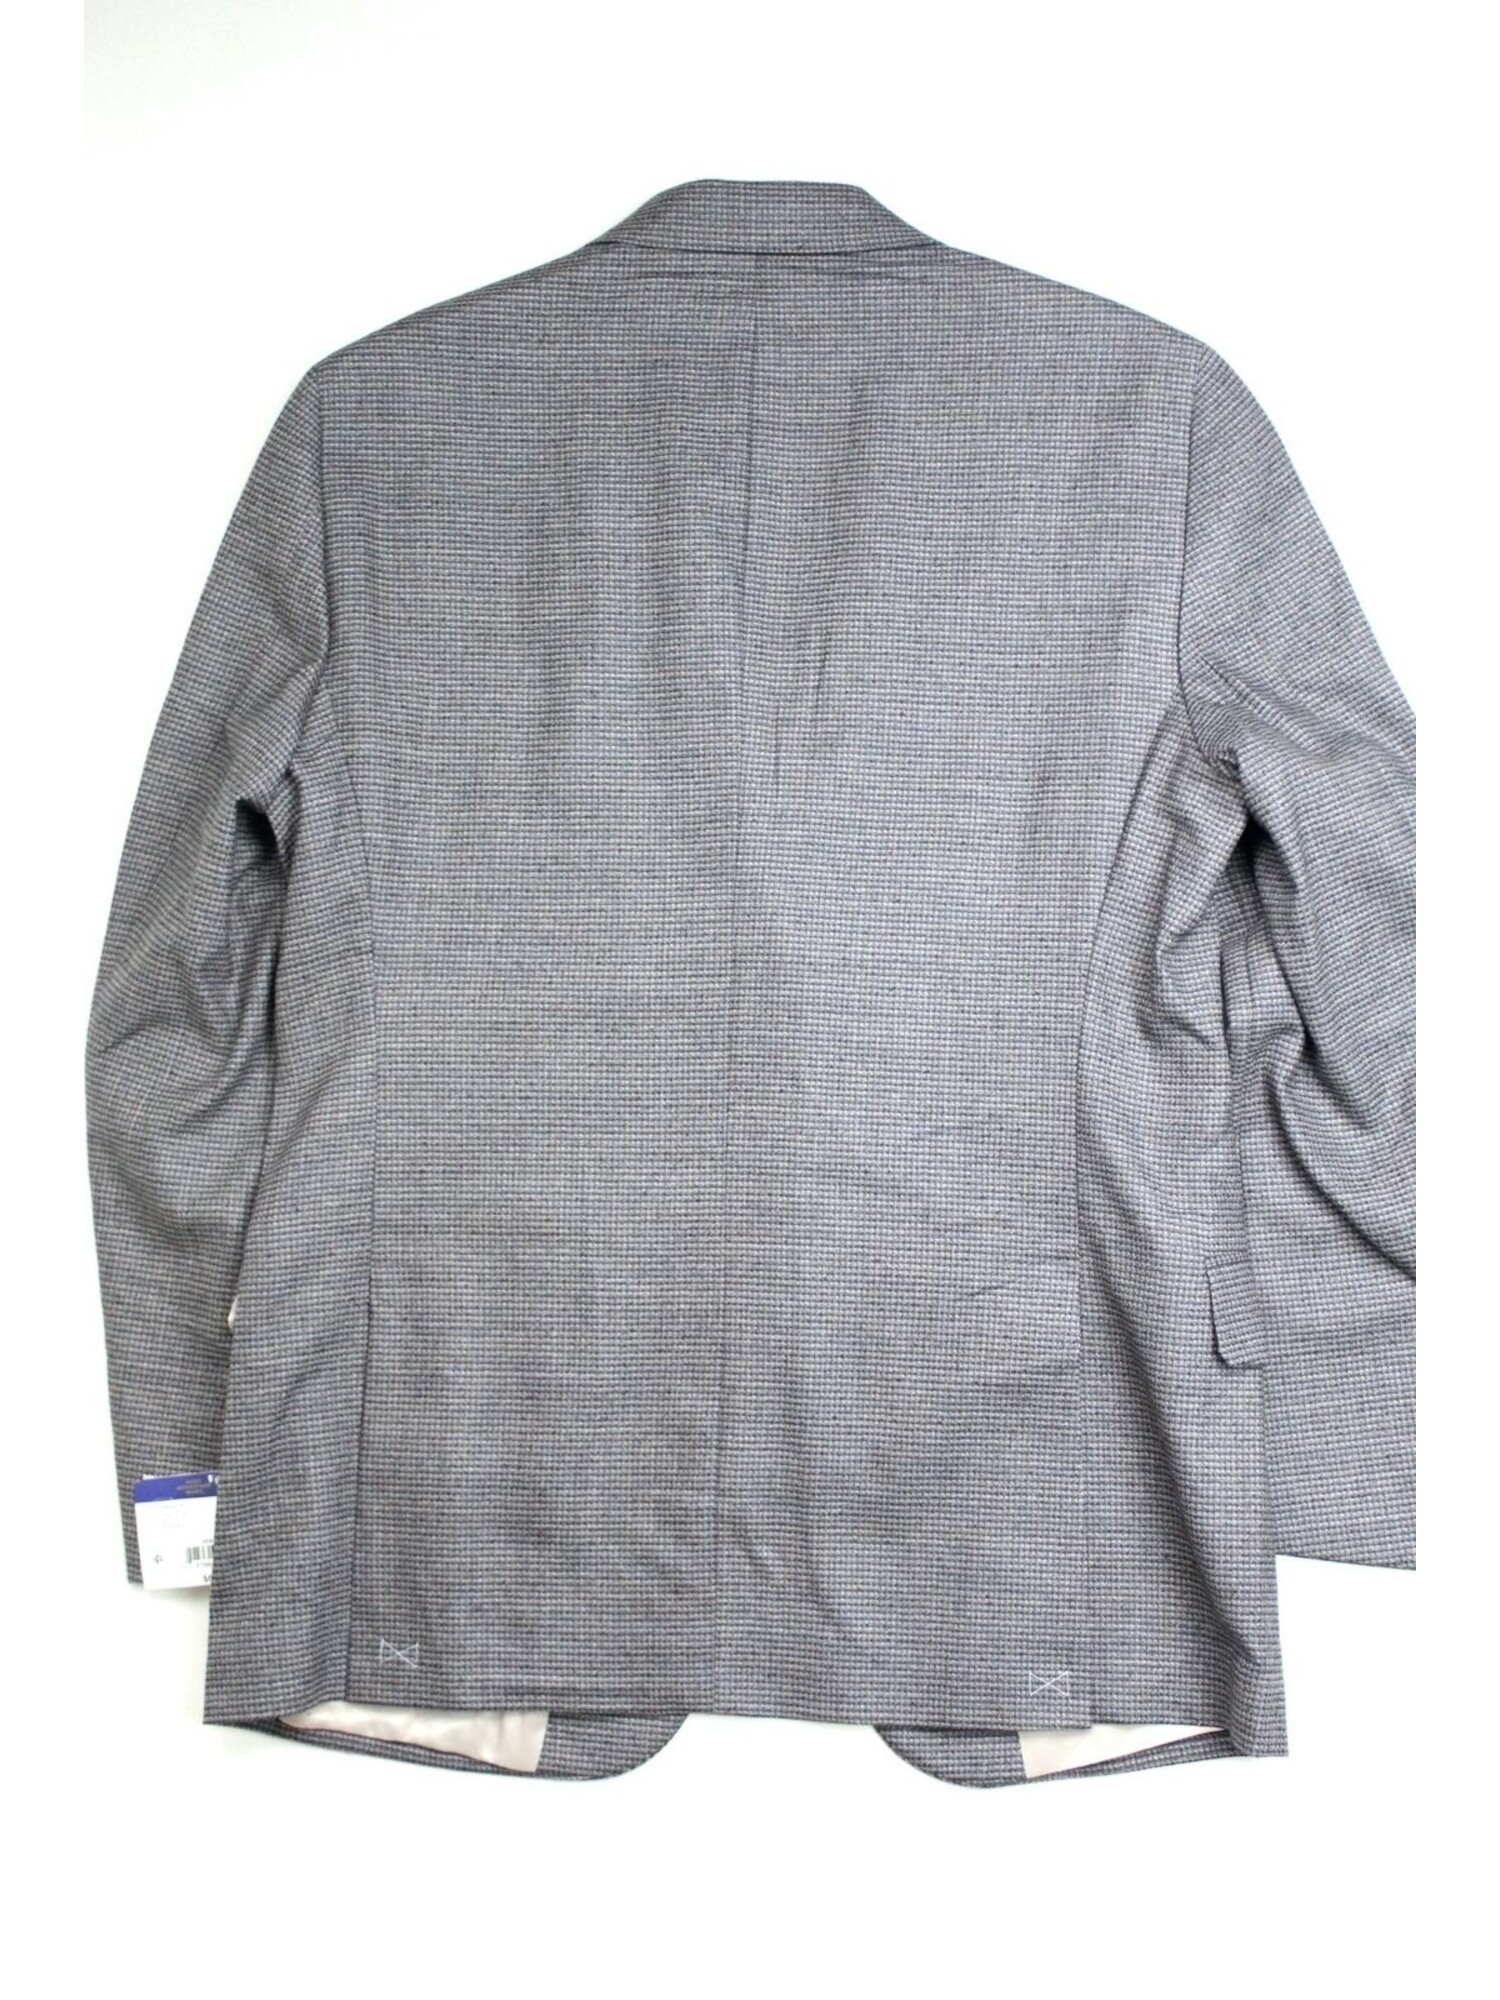 HART SCHAFFNER MARX Mens Gray Single Breasted, Check Stretch Blazer Jacket 42 SHORT